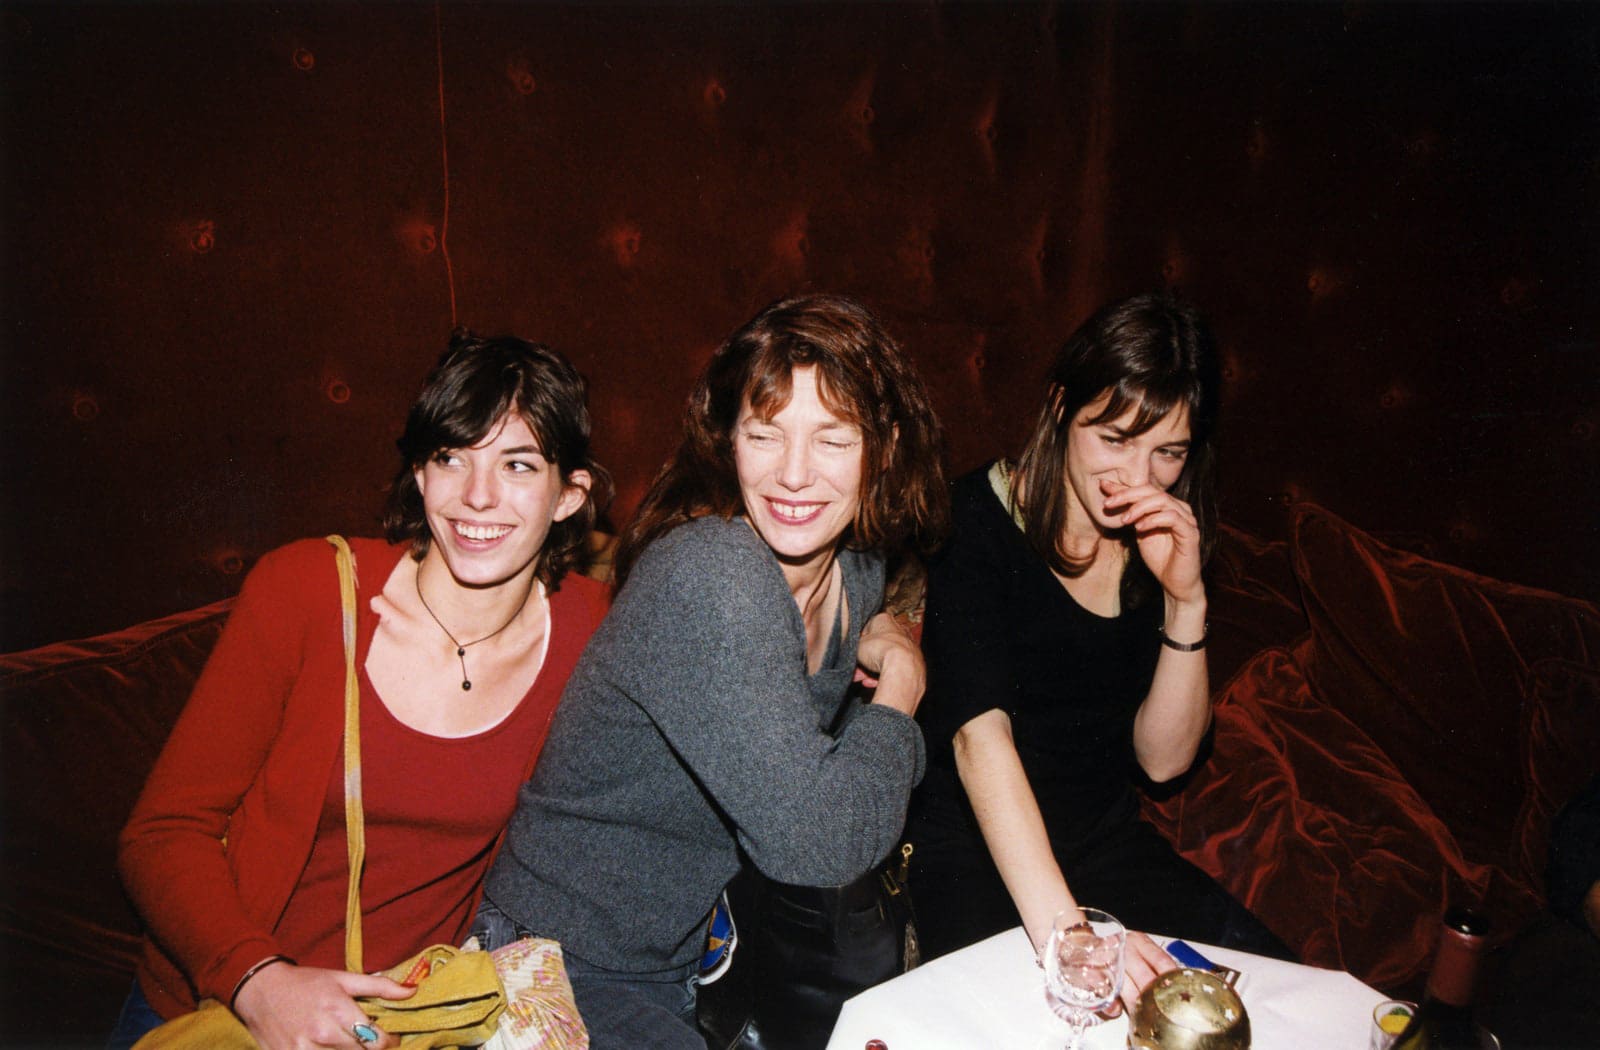 Lou Doillon, Jane Birkin, and Charlotte Gainsbourg in Paris in 1999